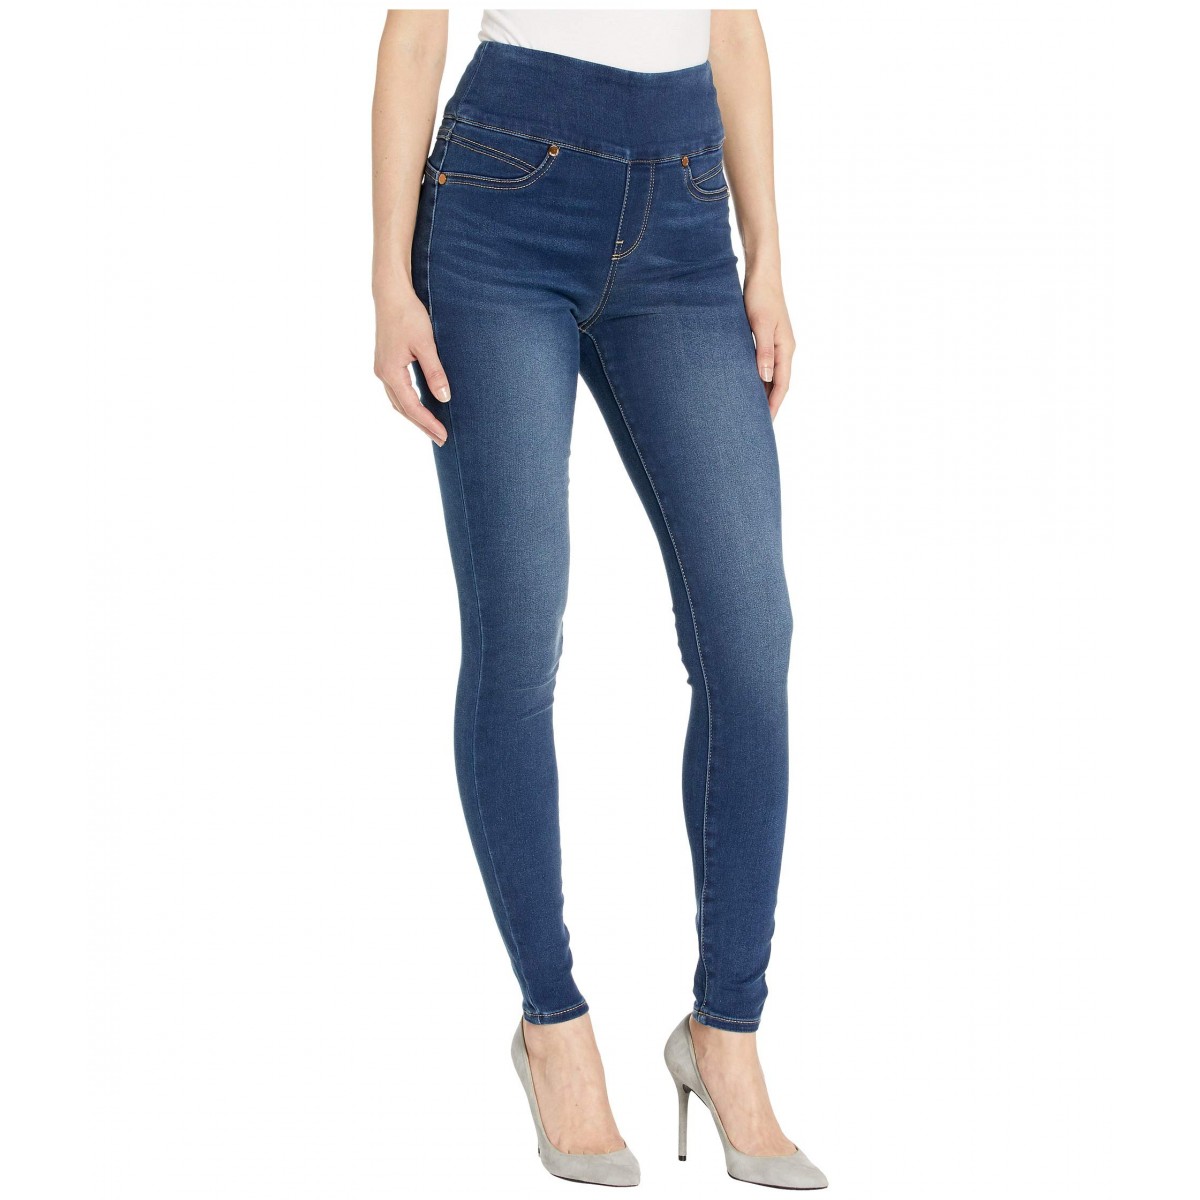 https://www.iglubox.com/image/cache/catalog/spdirect/womesn/womens_clothing/women-jeans/all-brands//Seven7-Jeans-Tummy-Toner-Skinny-in-Cazadero-9309219-4321-1200x1200.jpeg